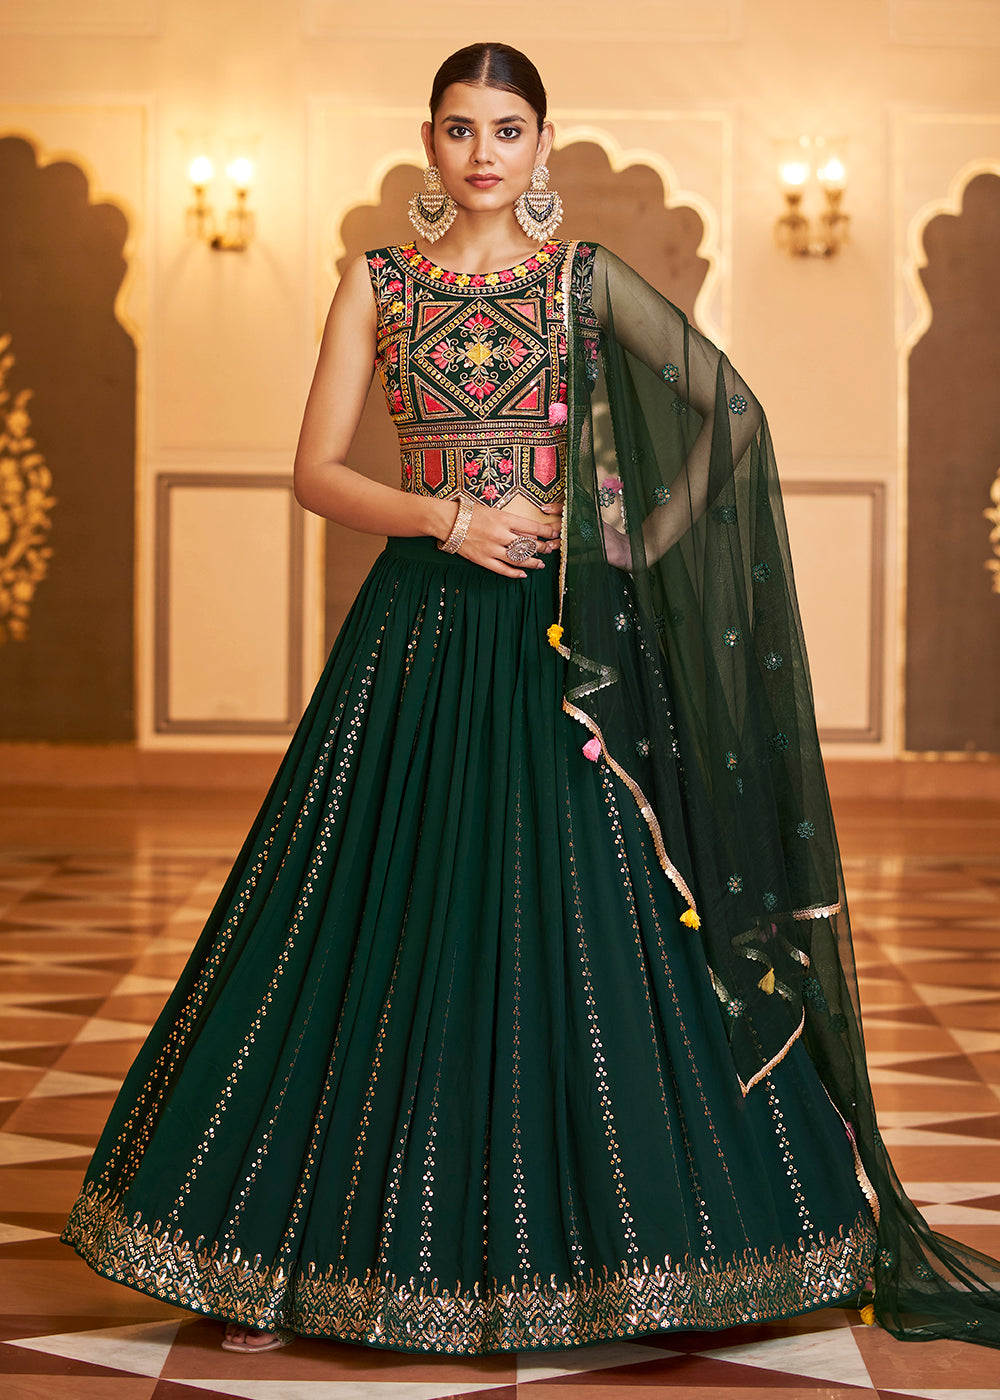 Buy Now Wedding Reception Luxuriant Green Trendy Lehenga Choli Online in USA, UK, Canada & Worldwide at Empress Clothing.